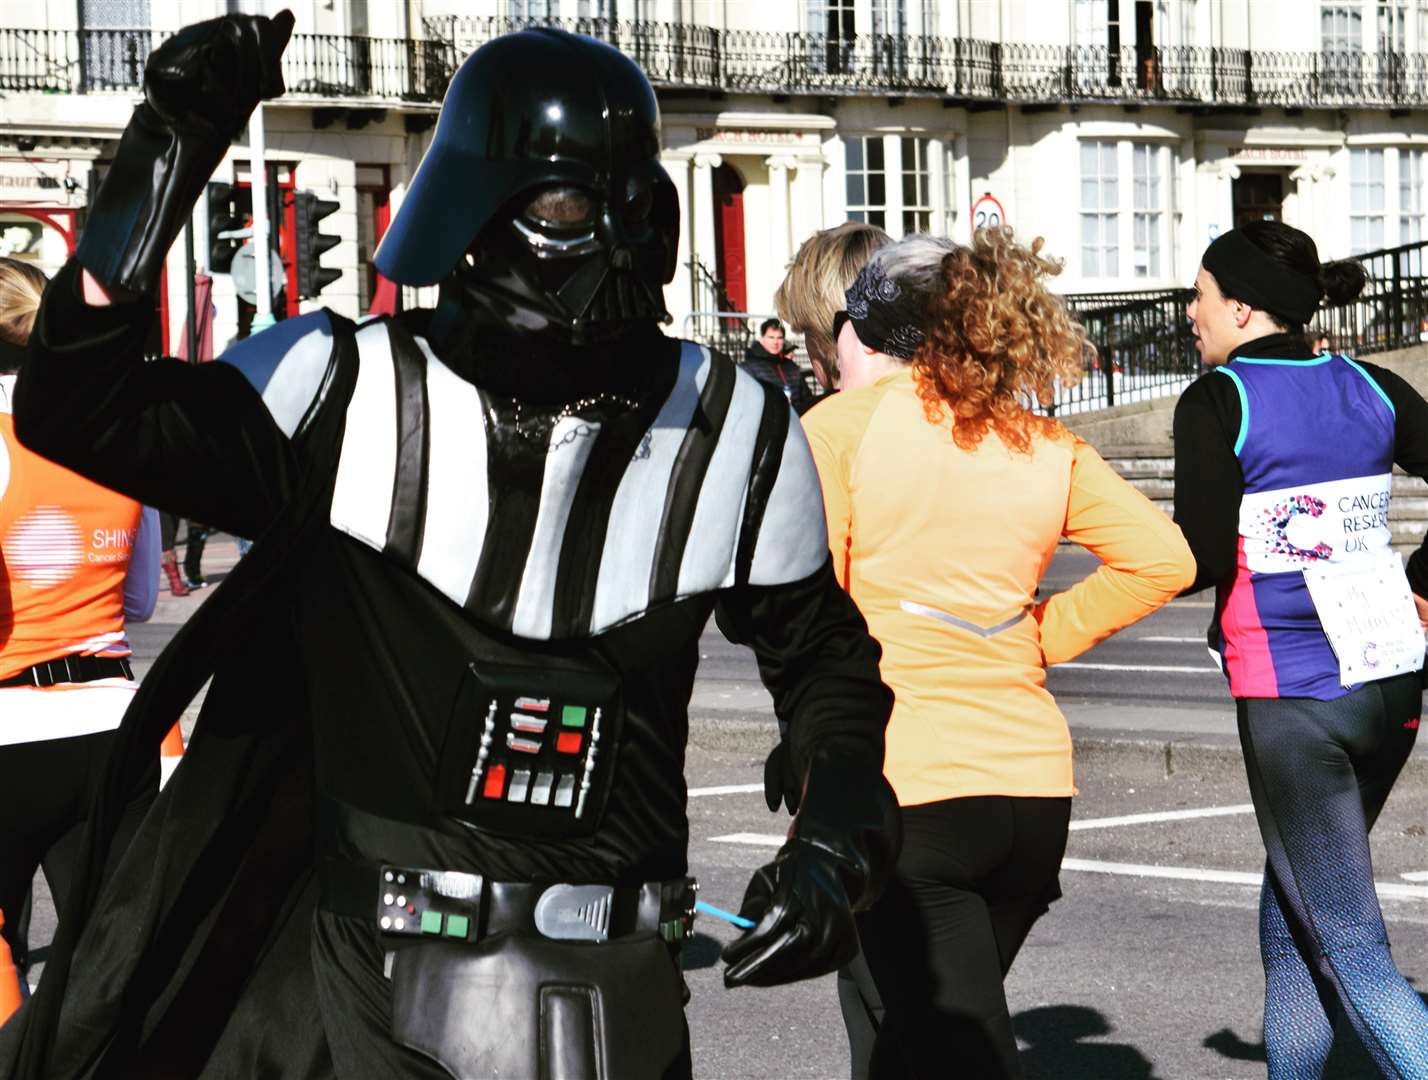 Philip Powell has practiced running in the Darth Vader costume at half marathons